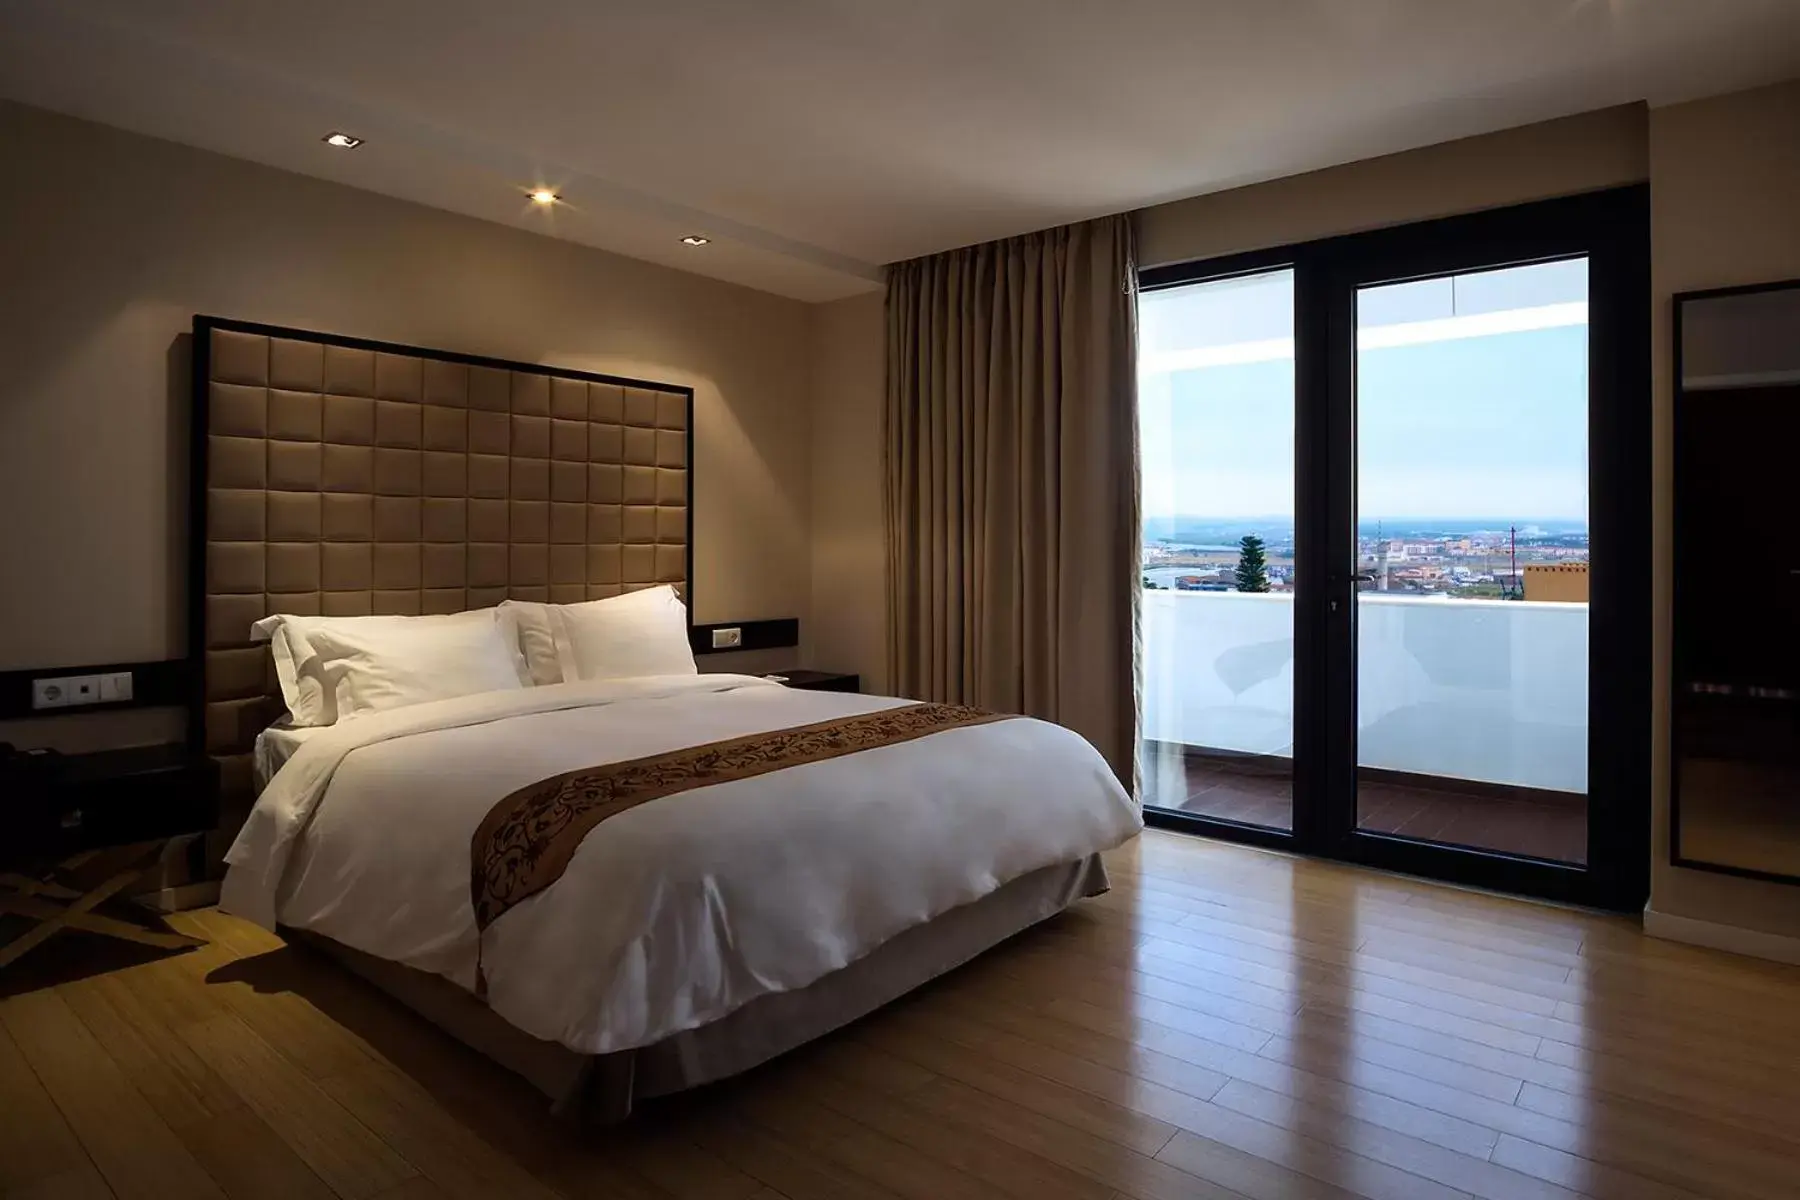 Bed, Room Photo in Sweet Atlantic Hotel & Spa